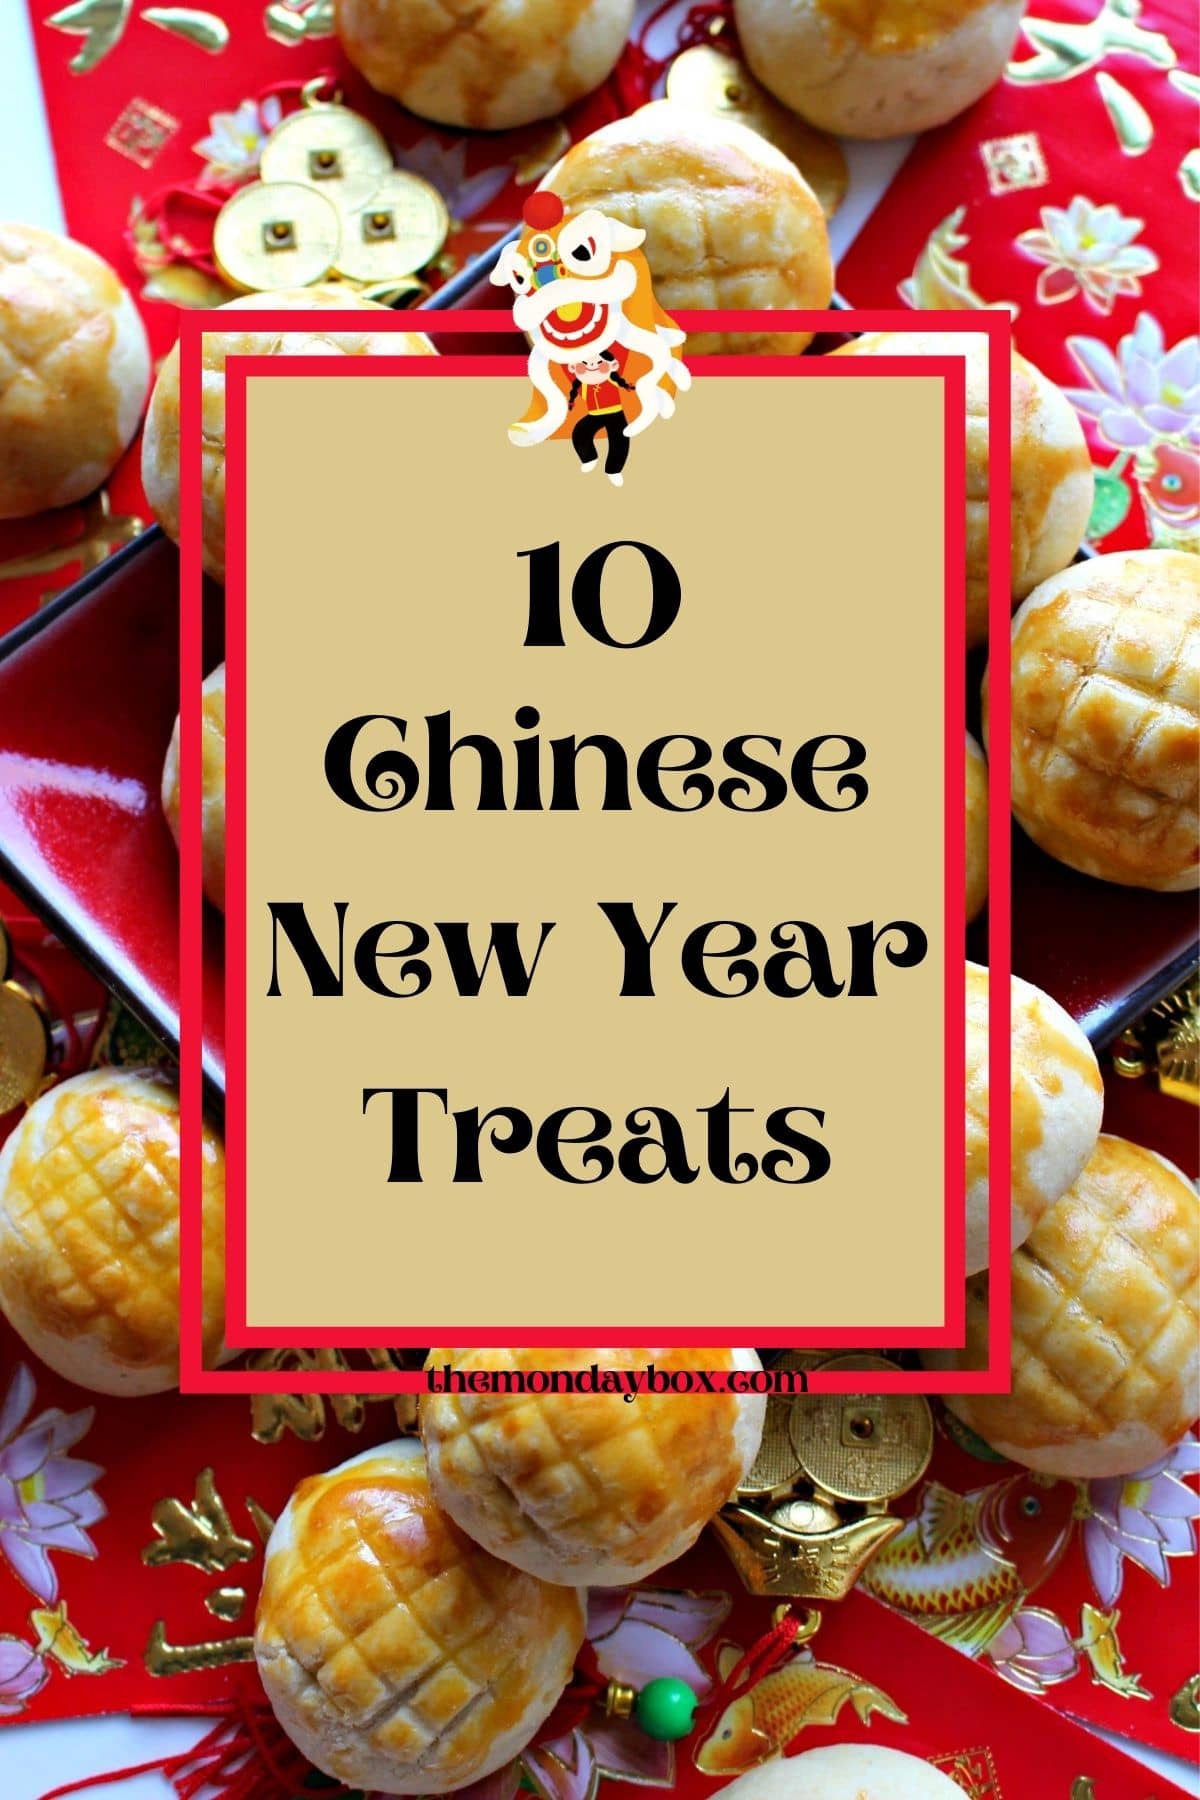 10 Chinese New Year Treats The Monday Box